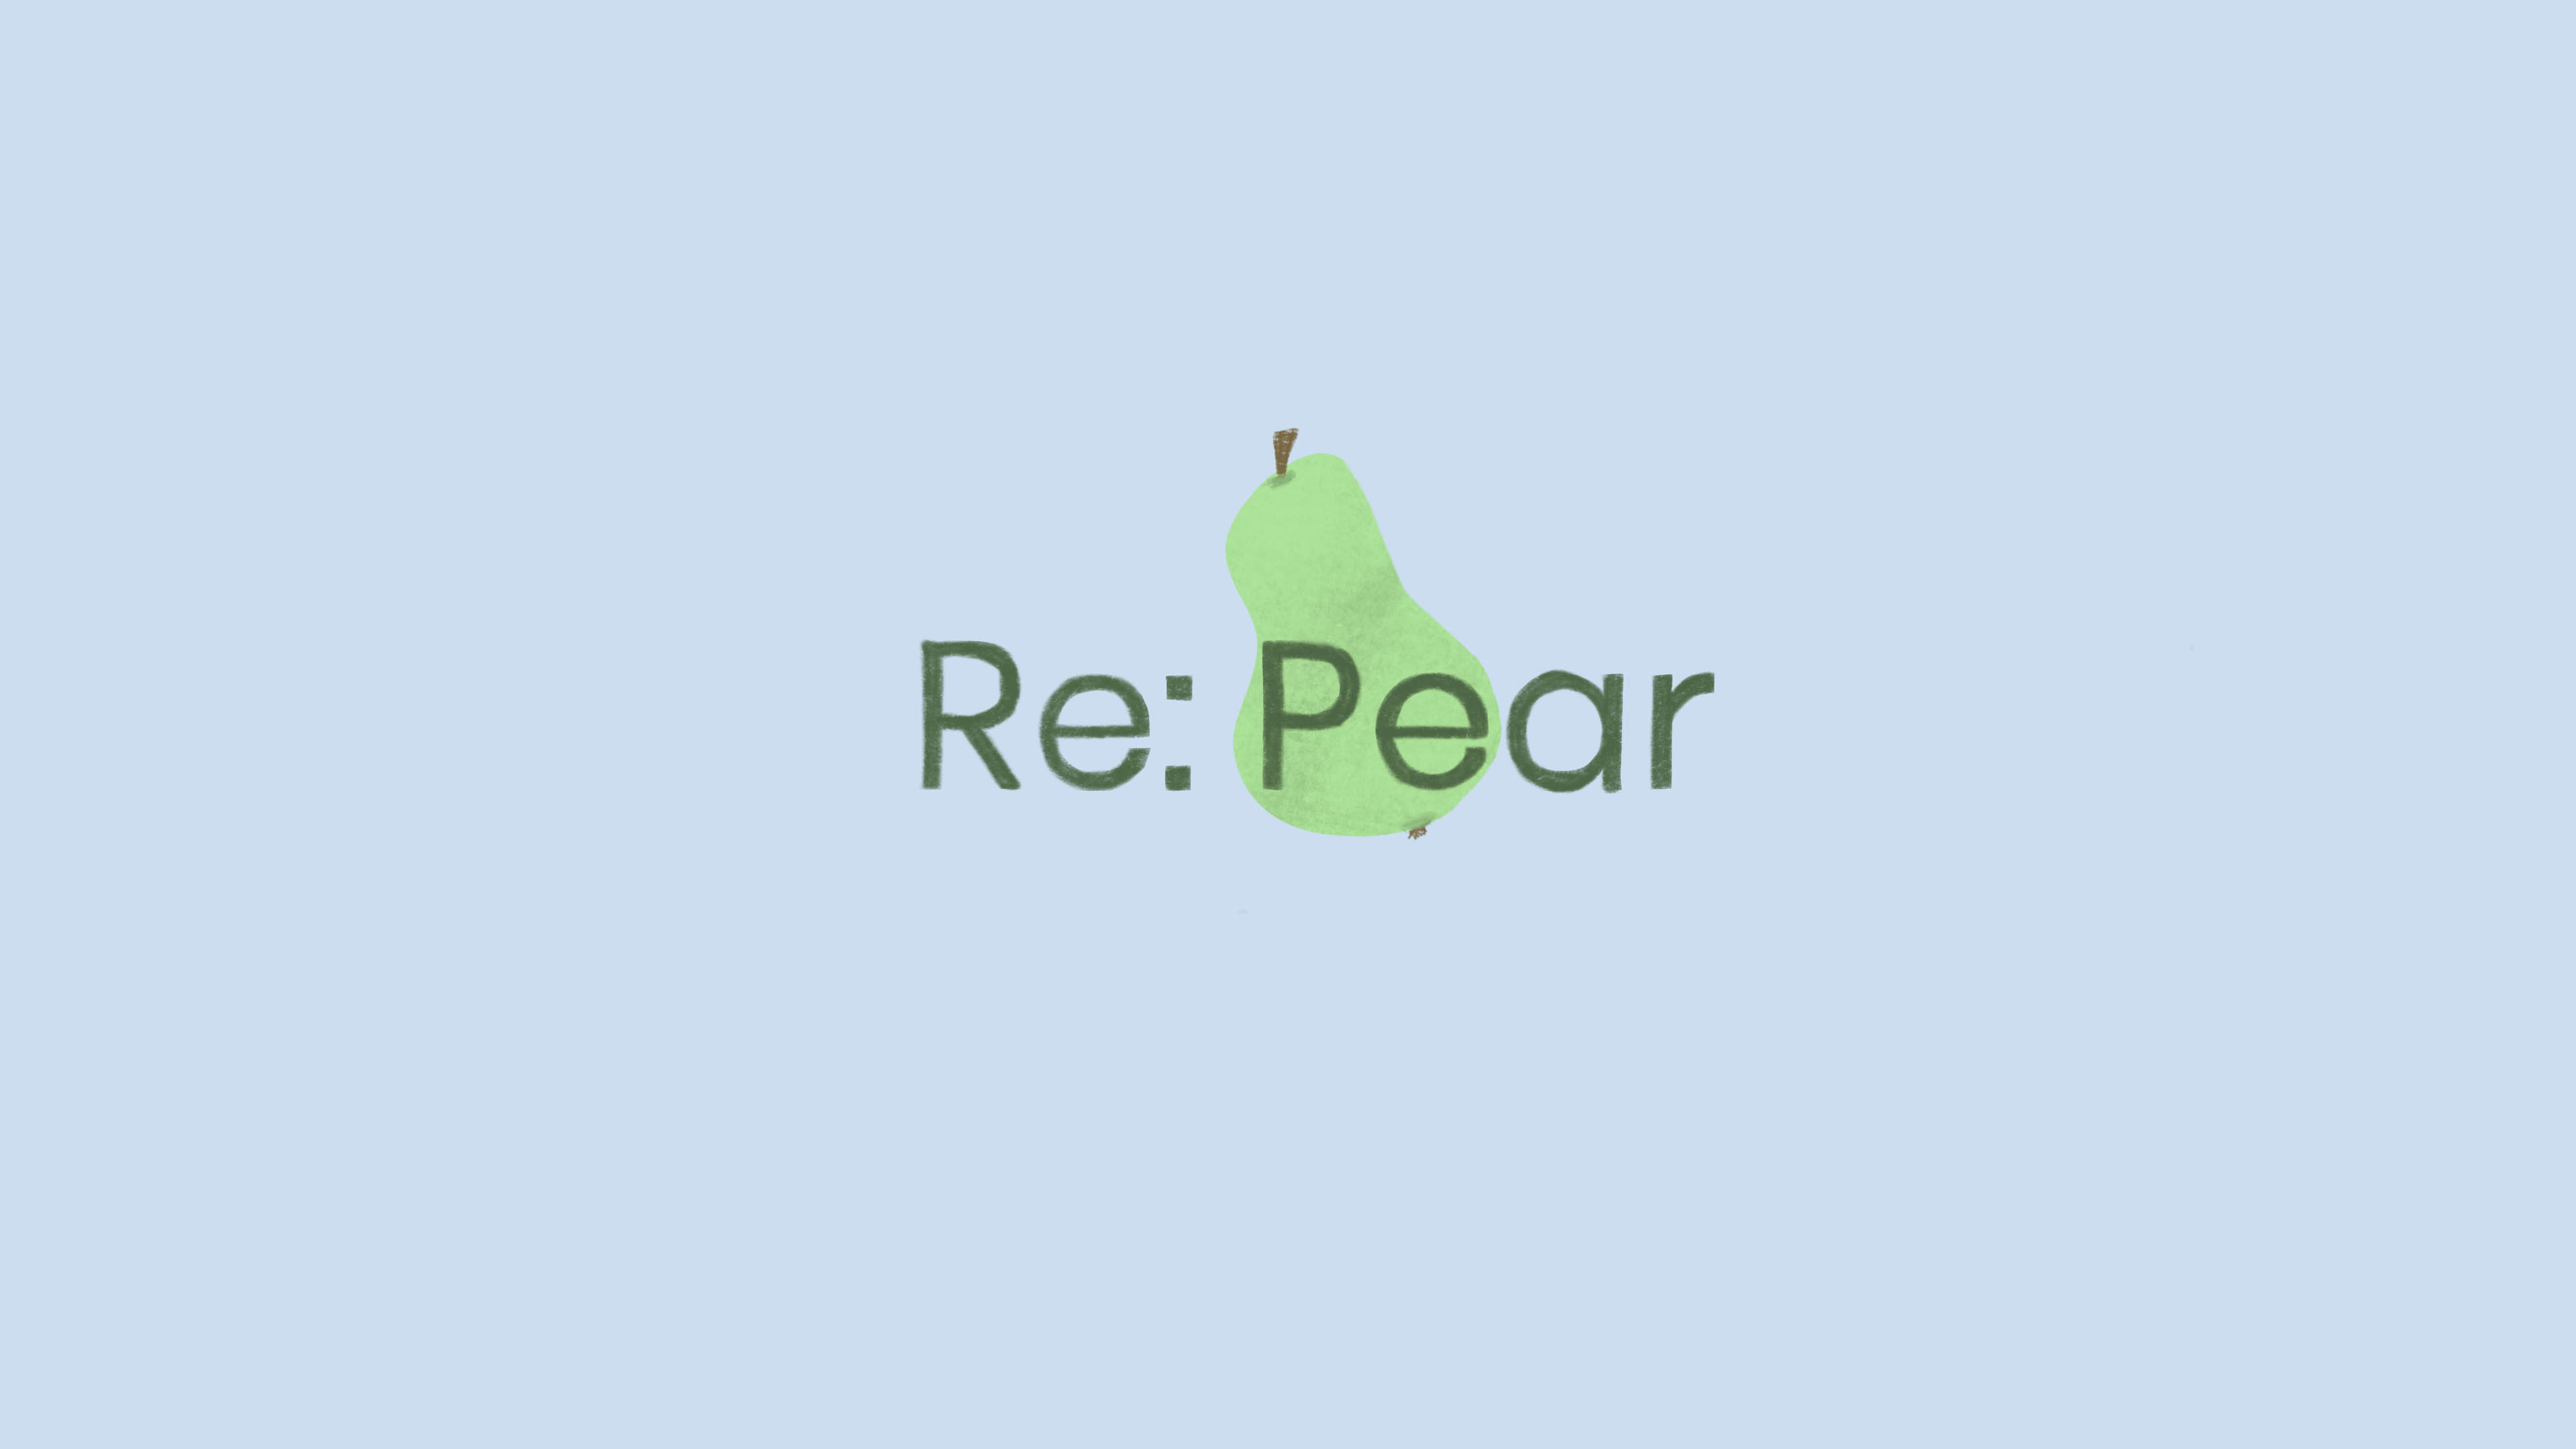 Re:Pear